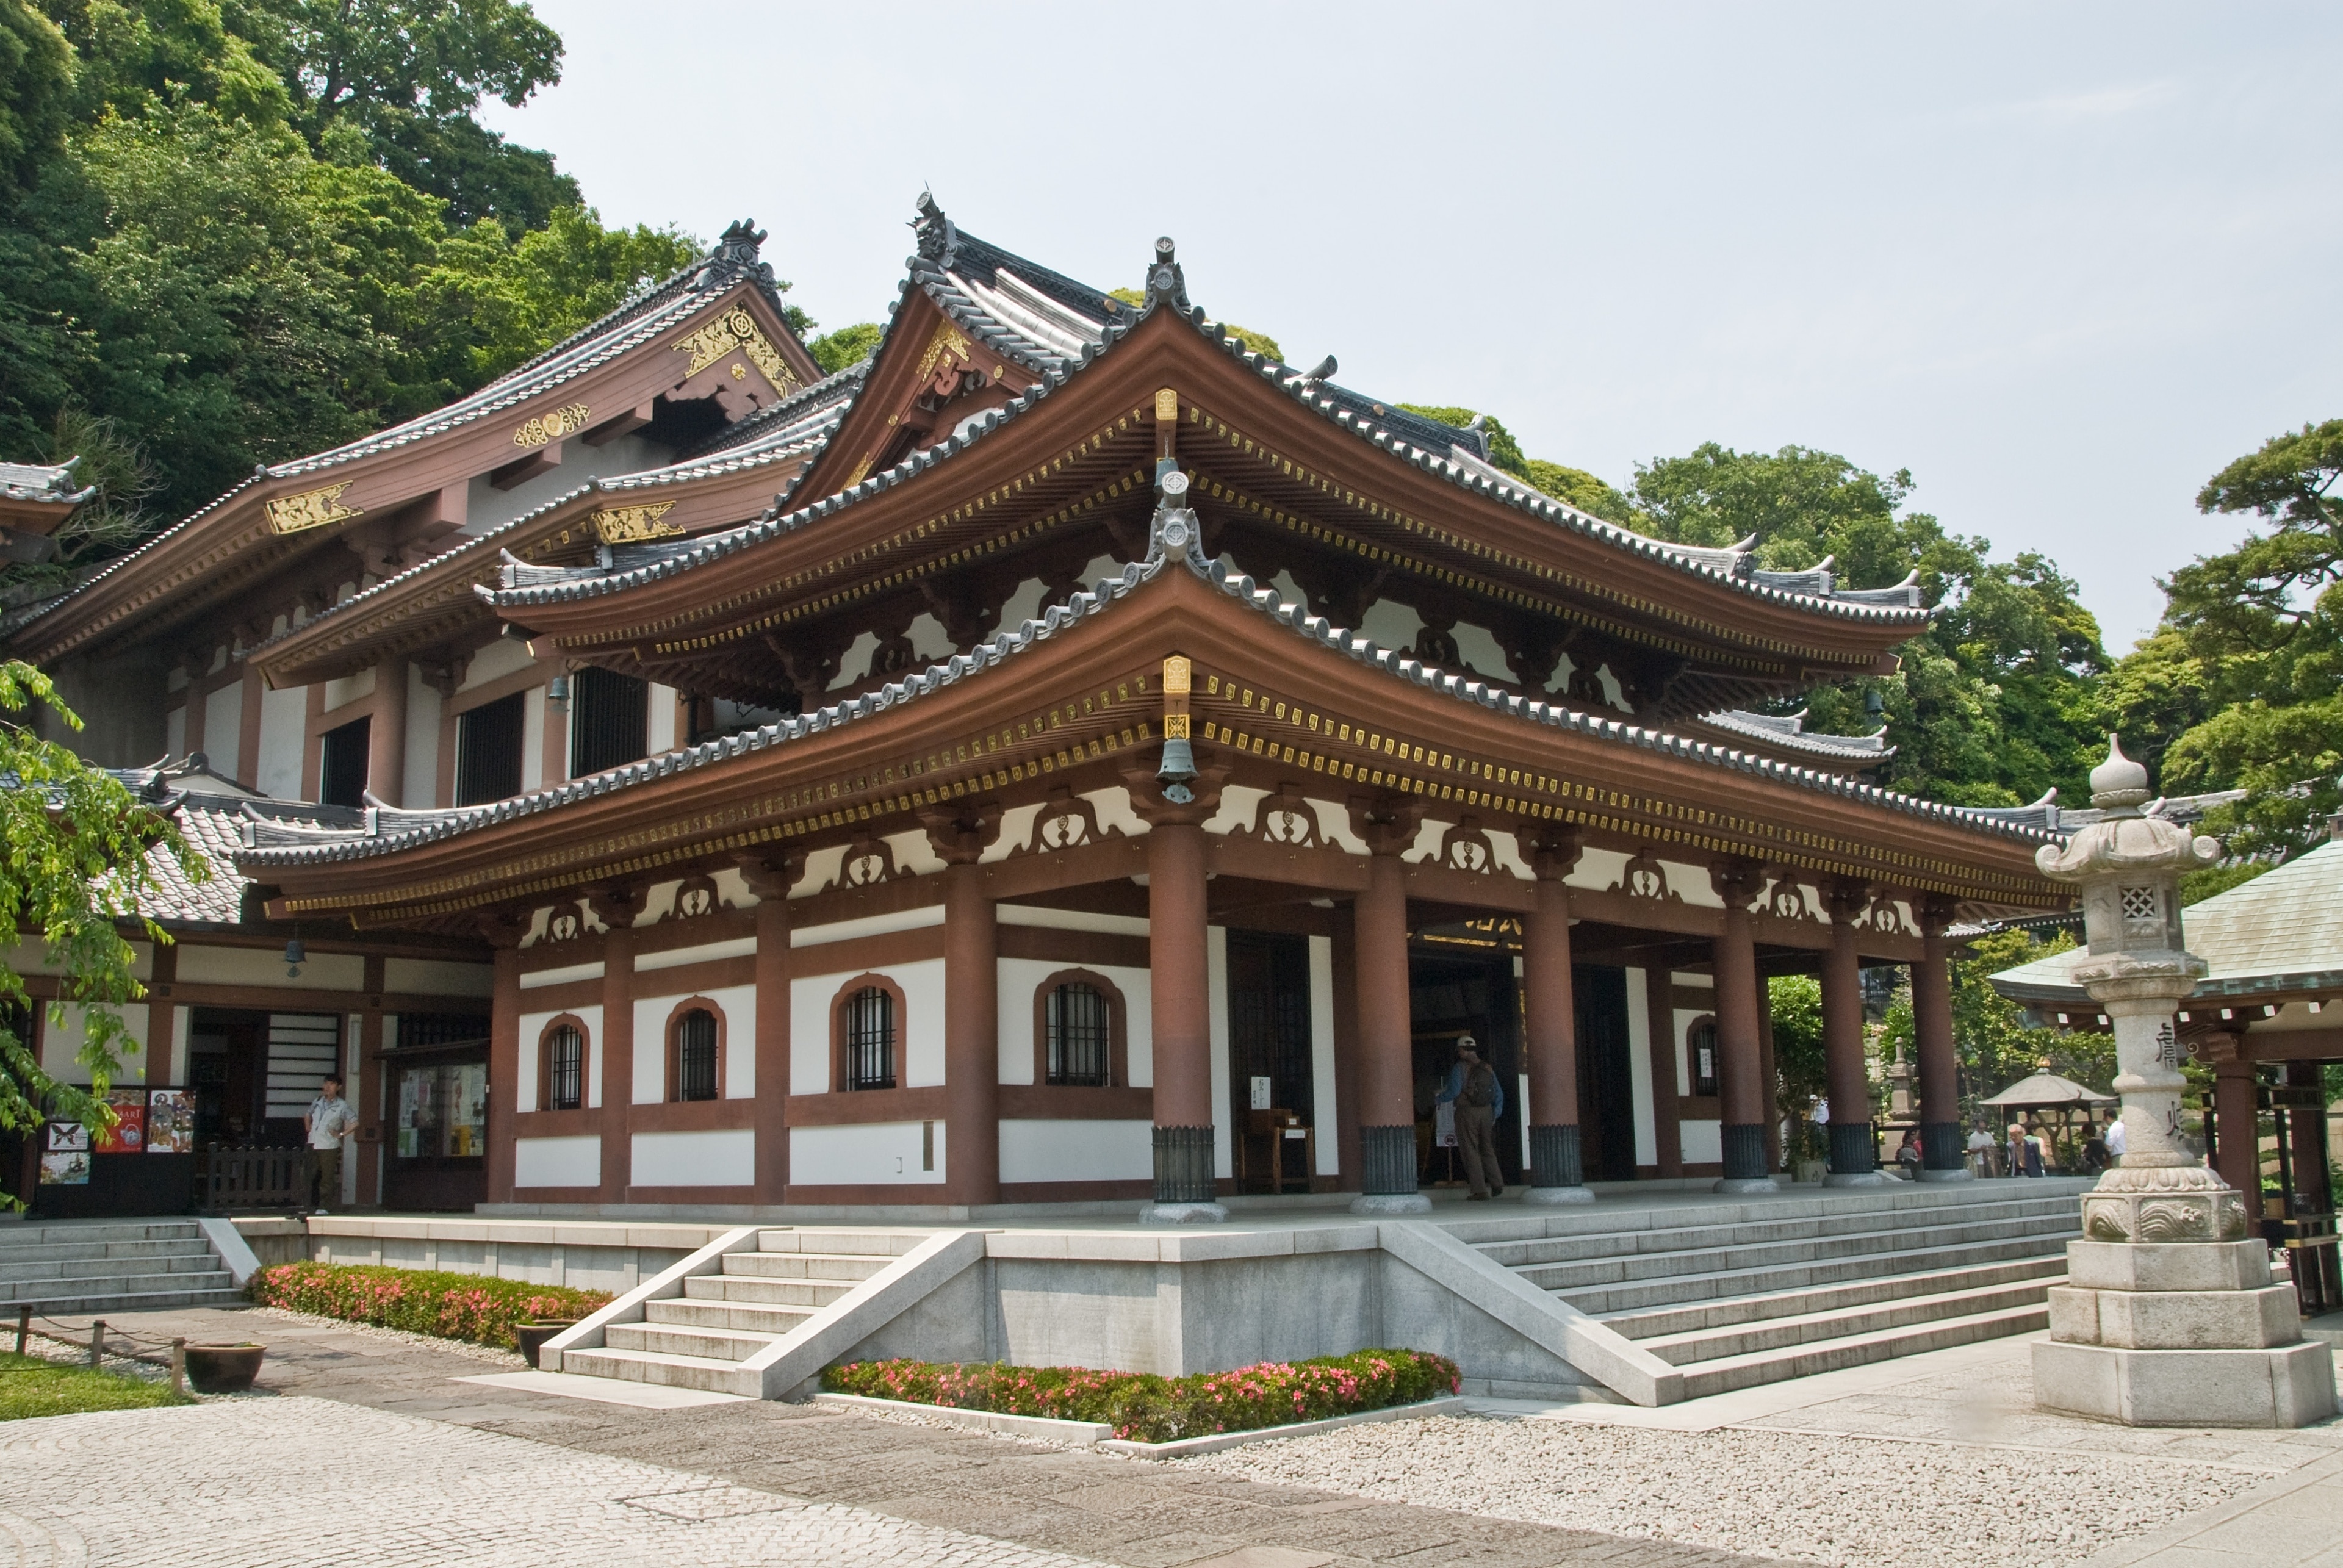 Kannon-dō (Main Hall) of Hase-dera Temple in Kamakura, Kanagawa.